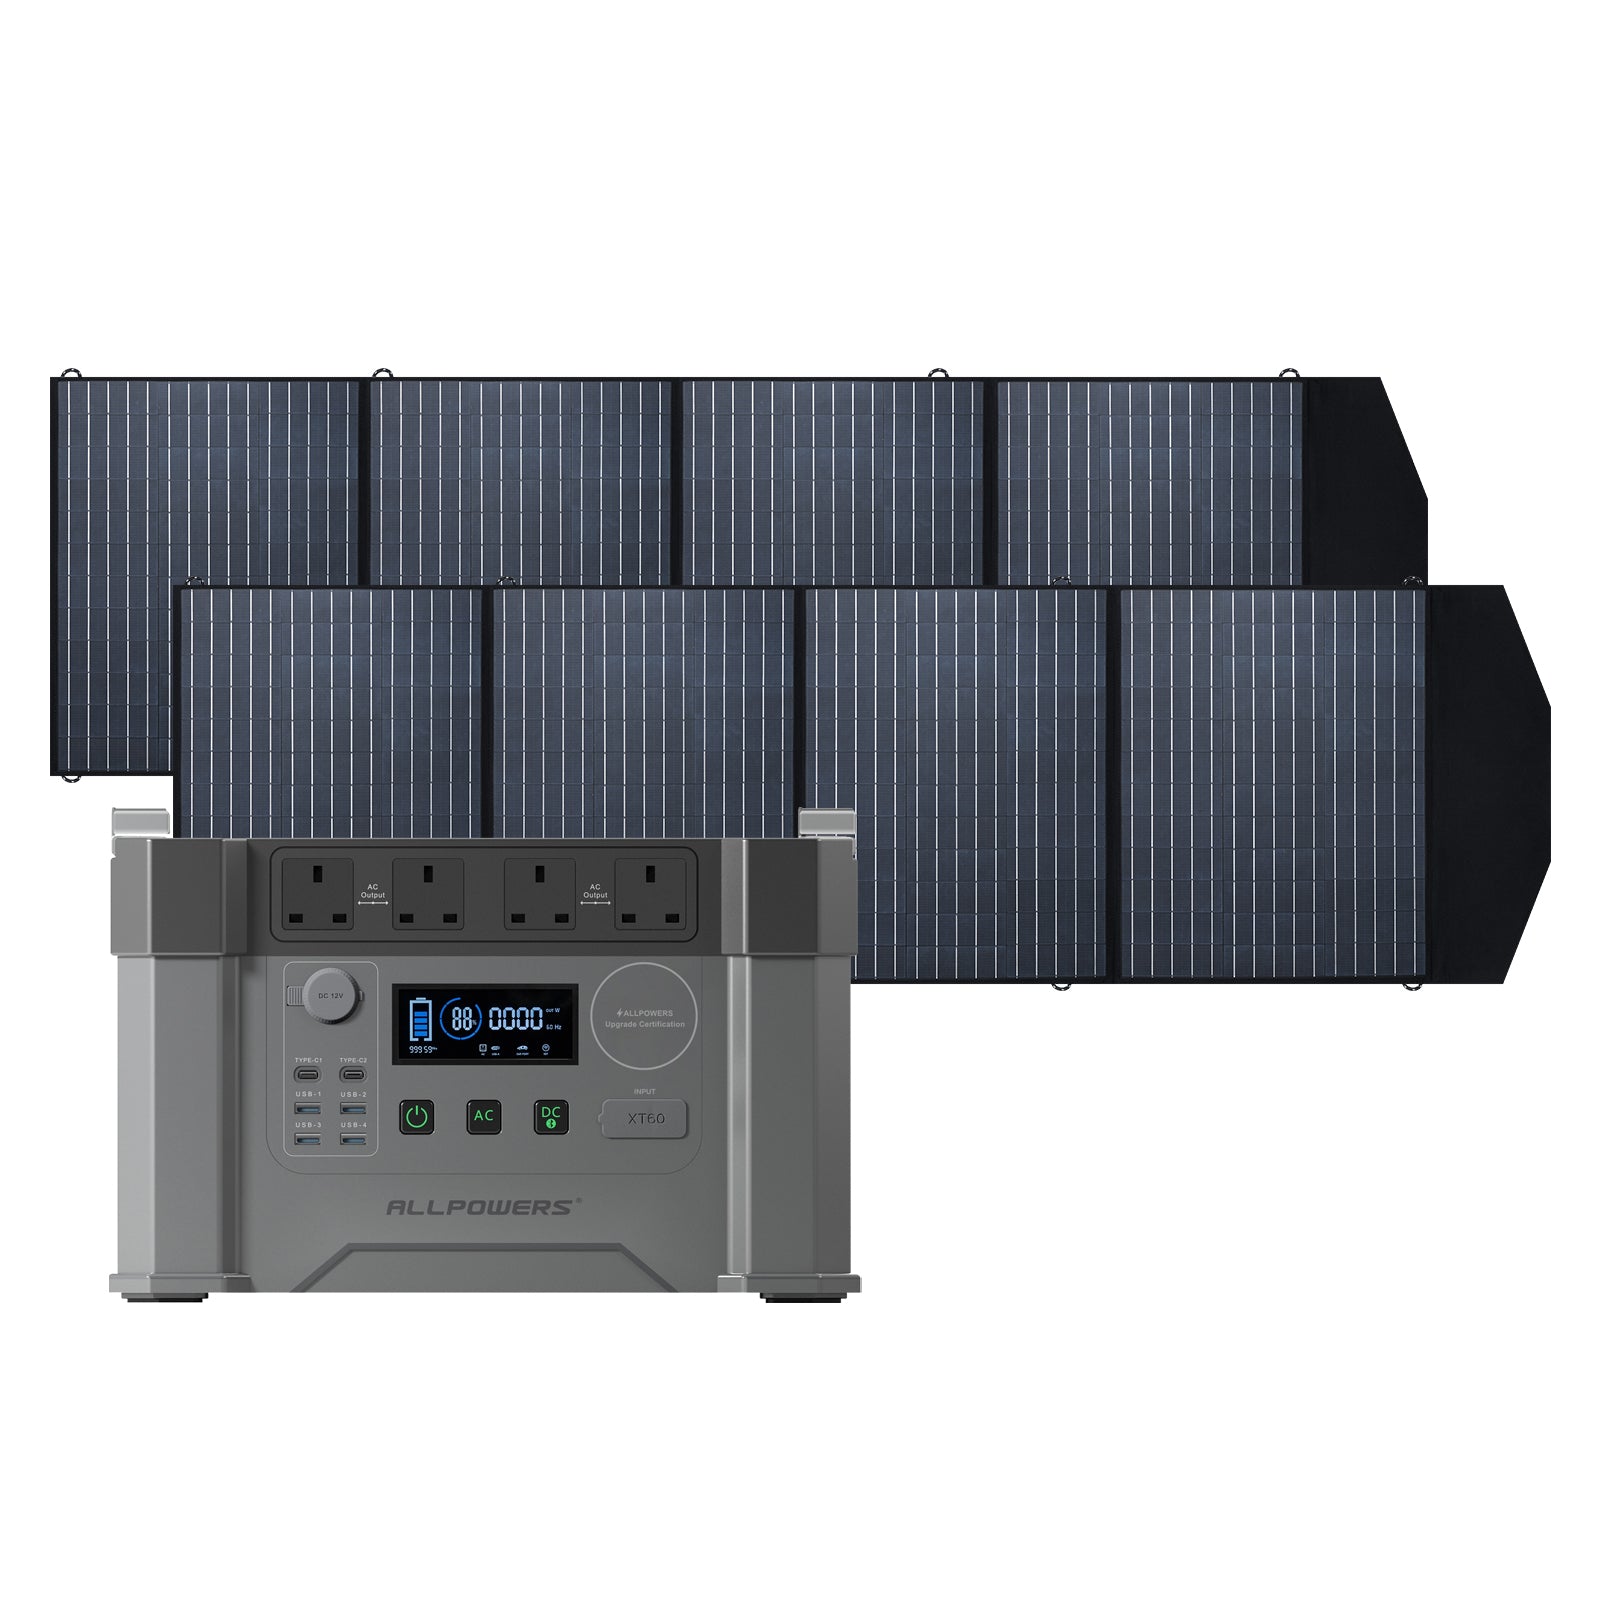 ALLPOWERS Solar Generator 2000W (S2000 + SP033 200W Solar Panel)